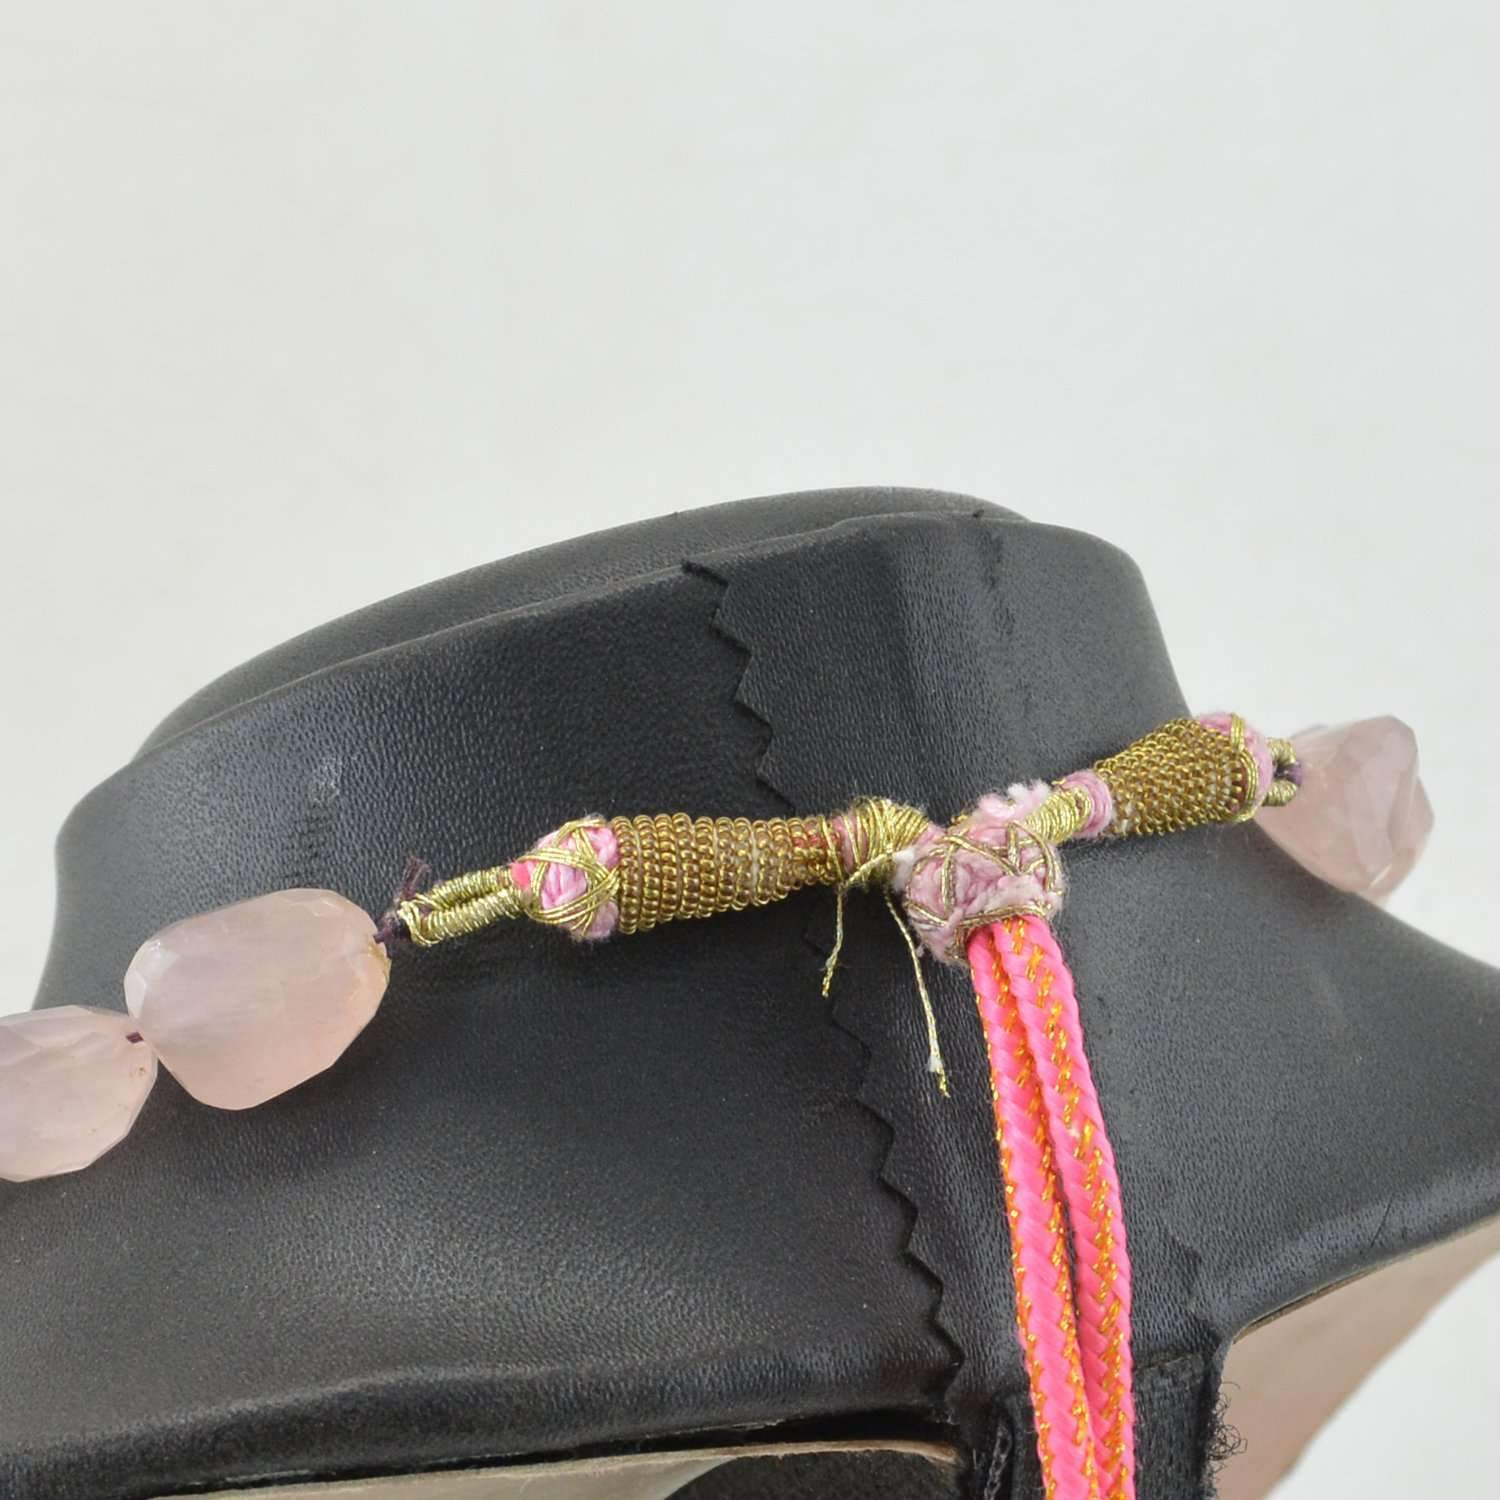 gemsmore:Natural Pink Rose Quartz Necklace Single Strand Faceted Beads